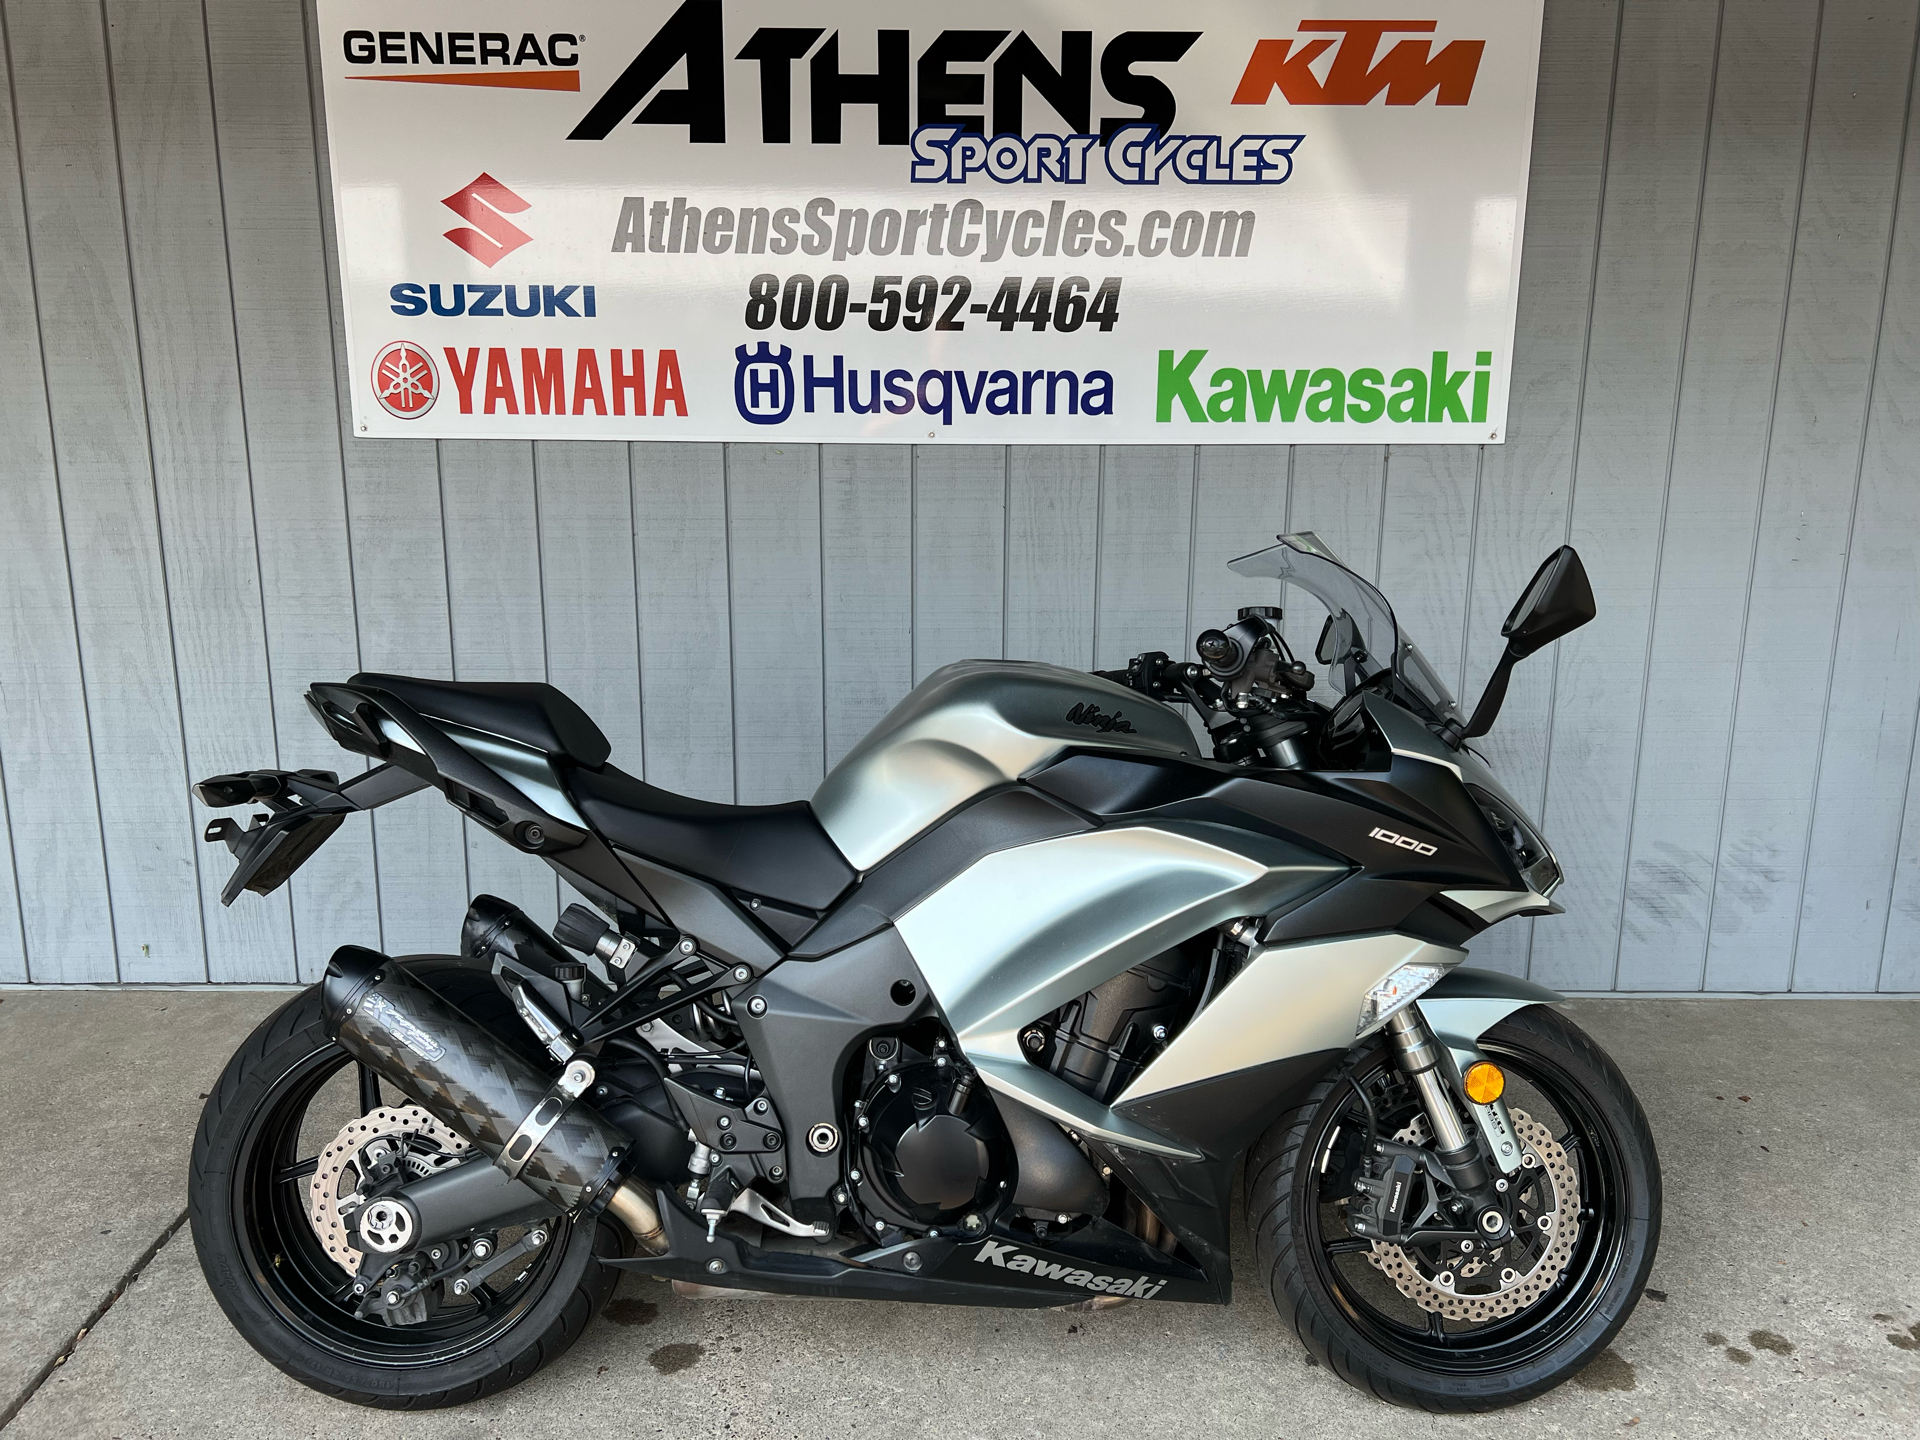 2018 Kawasaki Ninja 1000 ABS in Athens, Ohio - Photo 2